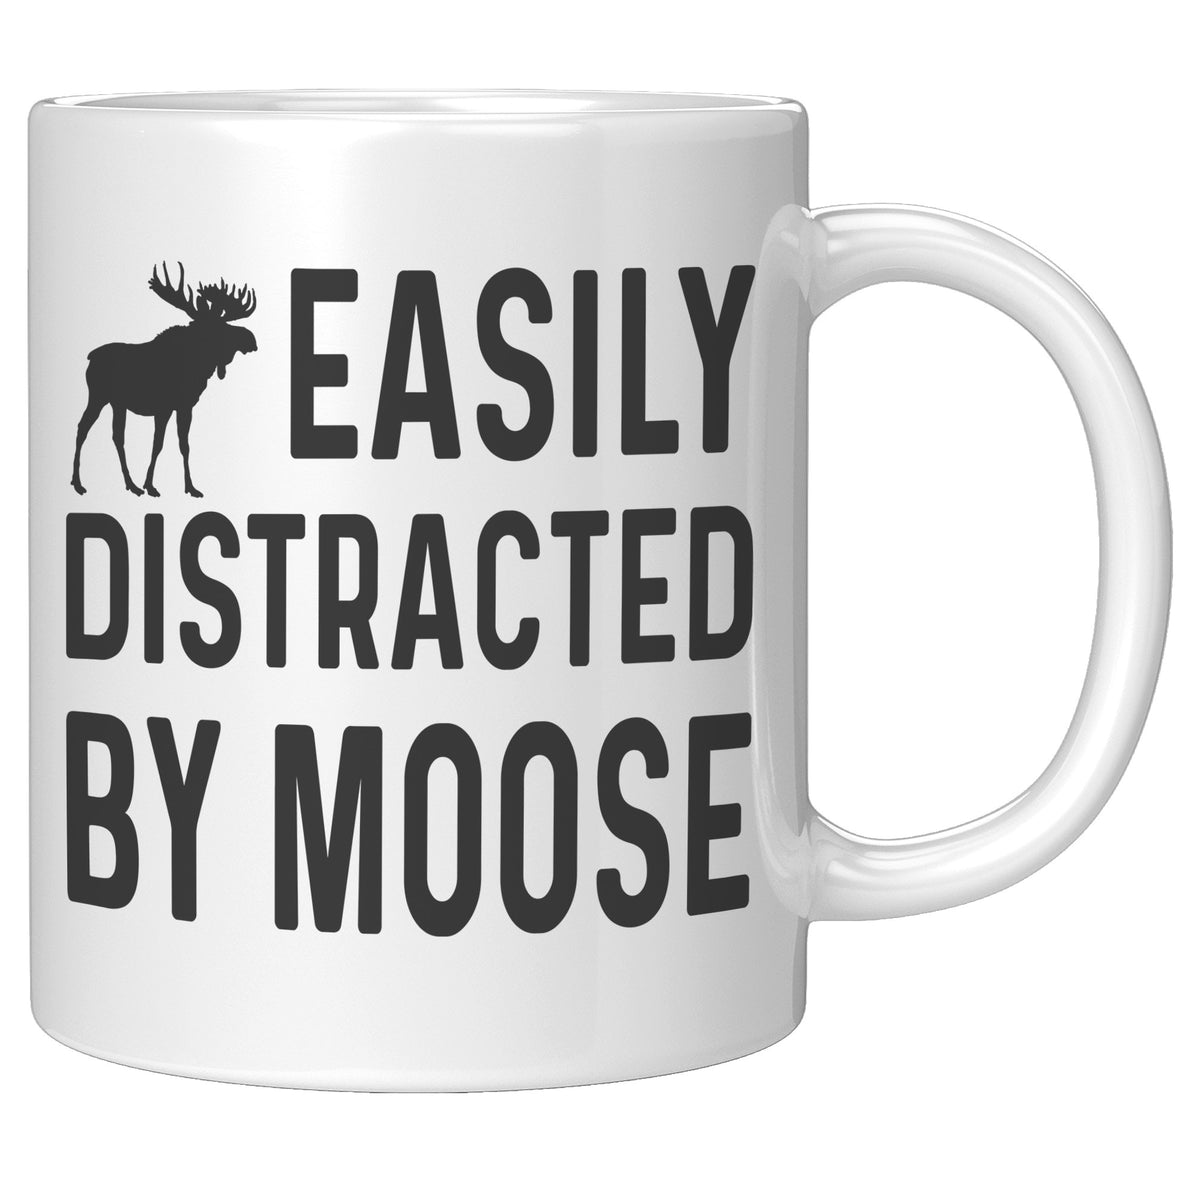 Moose Mug - Easily Distracted by Moose